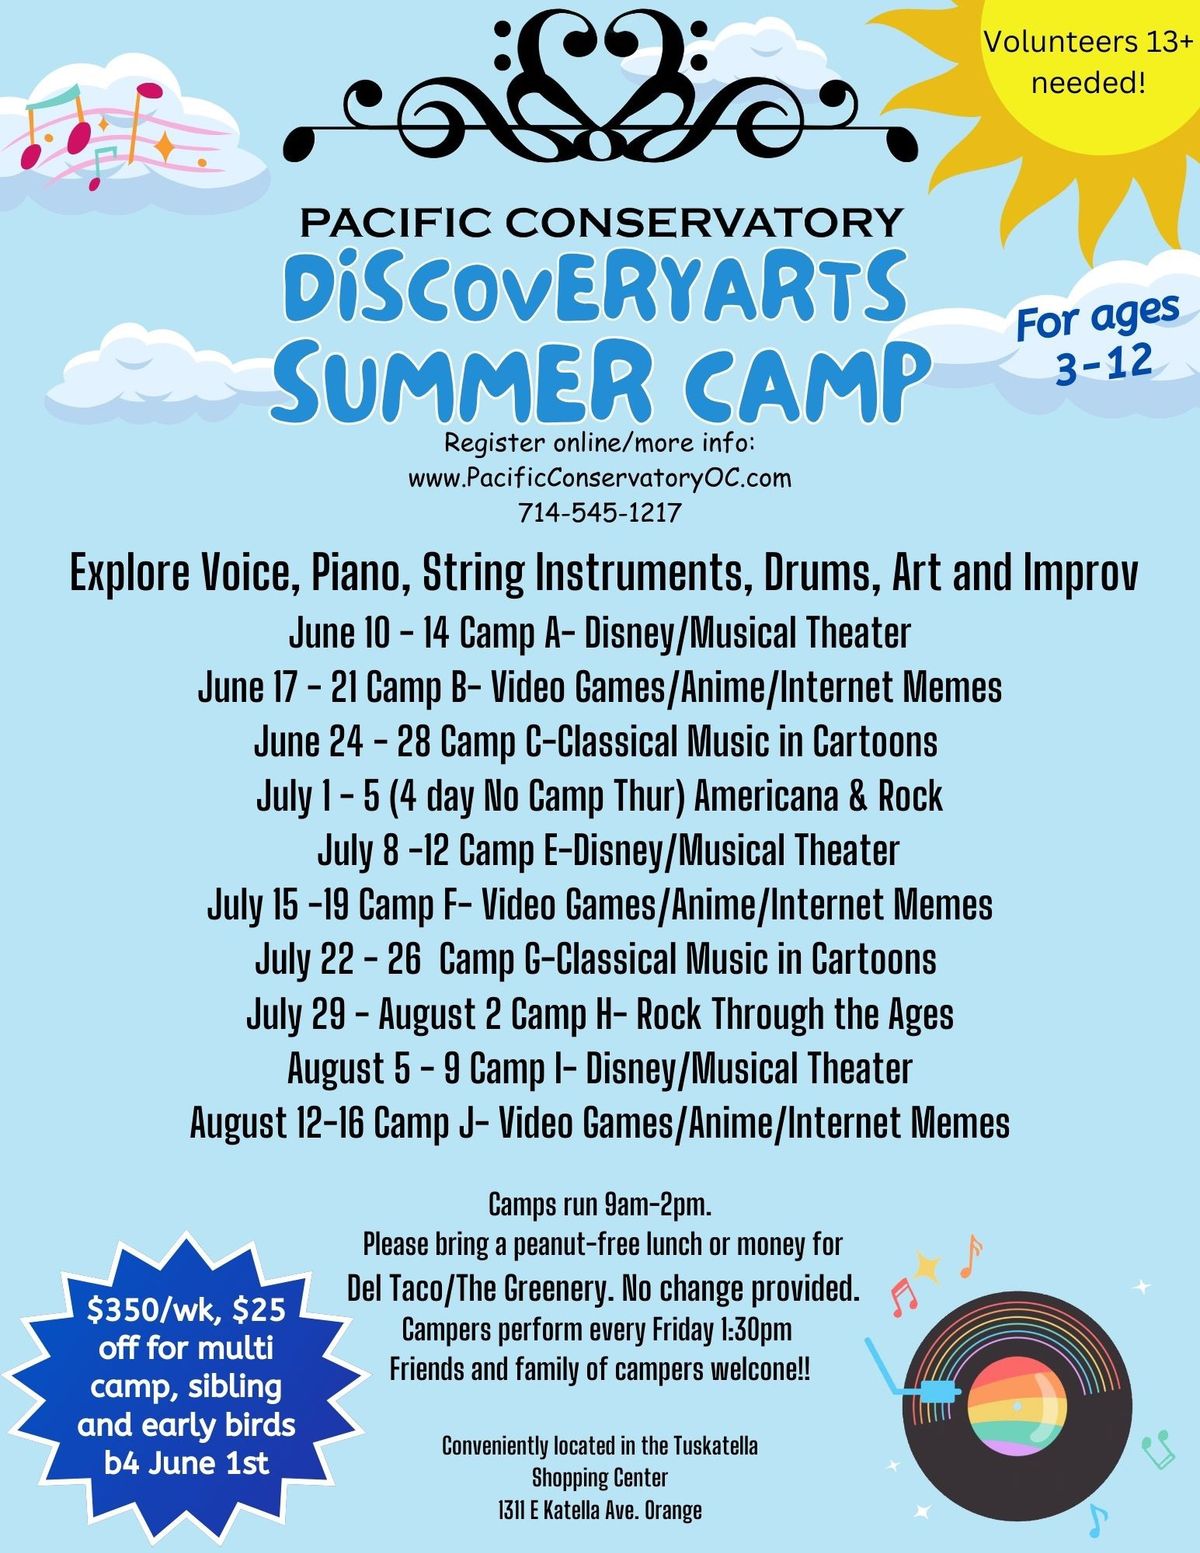 DiscoveryArts Summer Camp A: Disney & Musical Theater